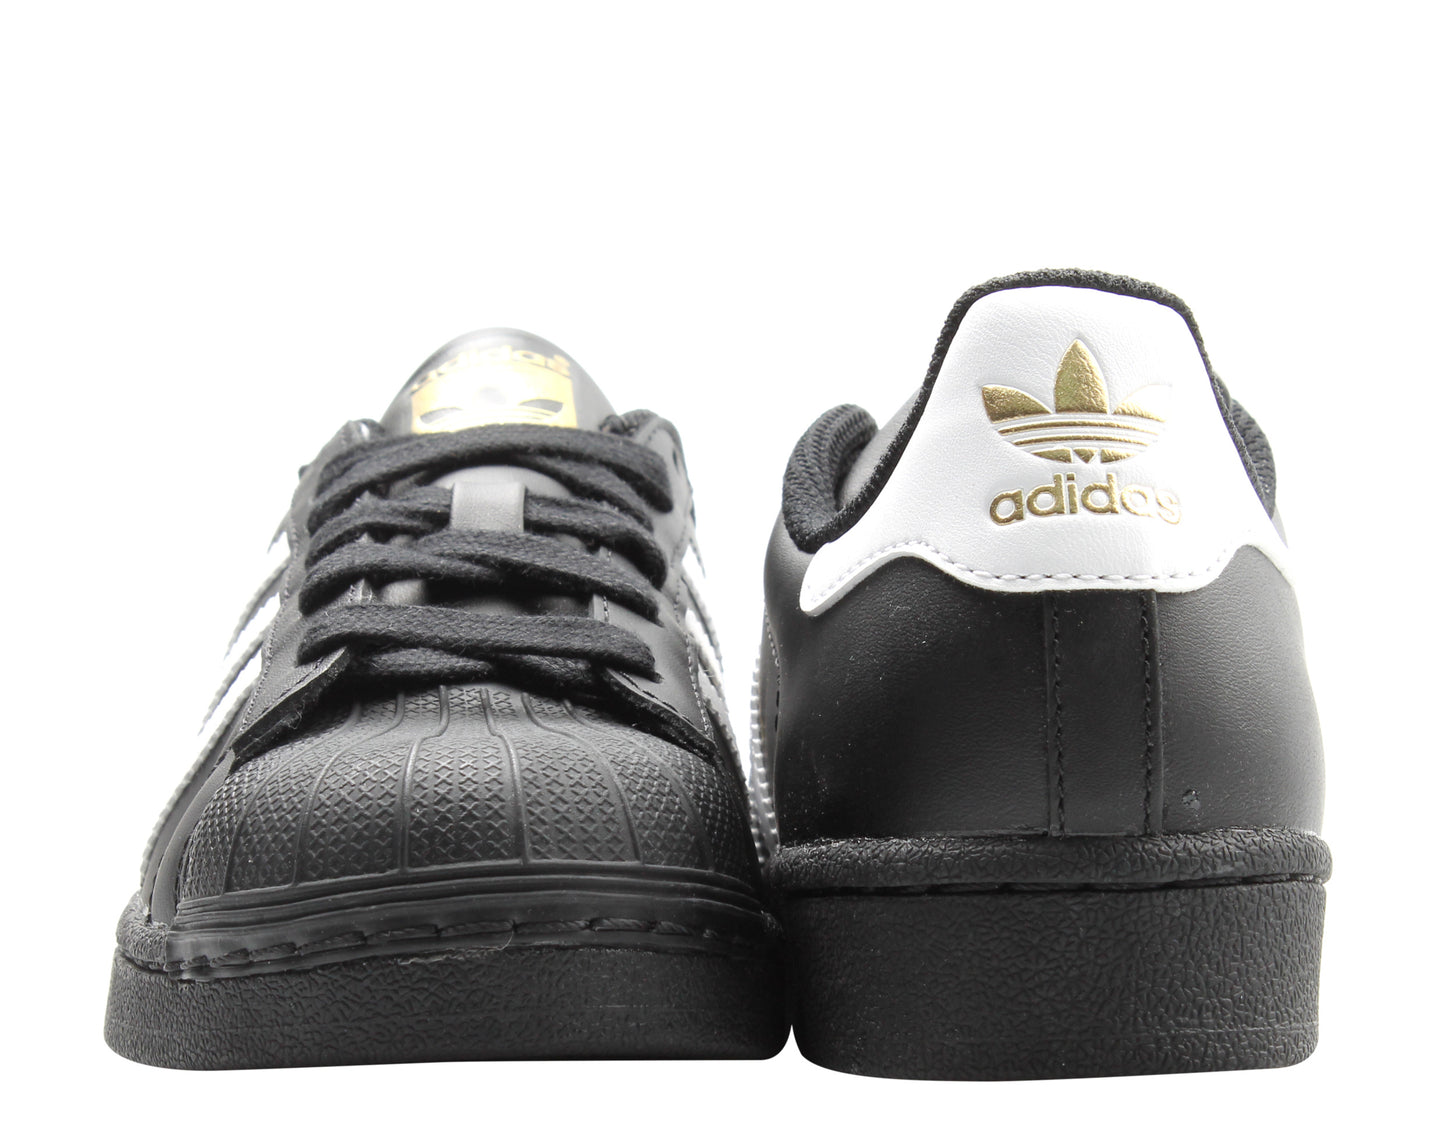 Adidas Originals Superstar J Big Kids Basketball Shoes